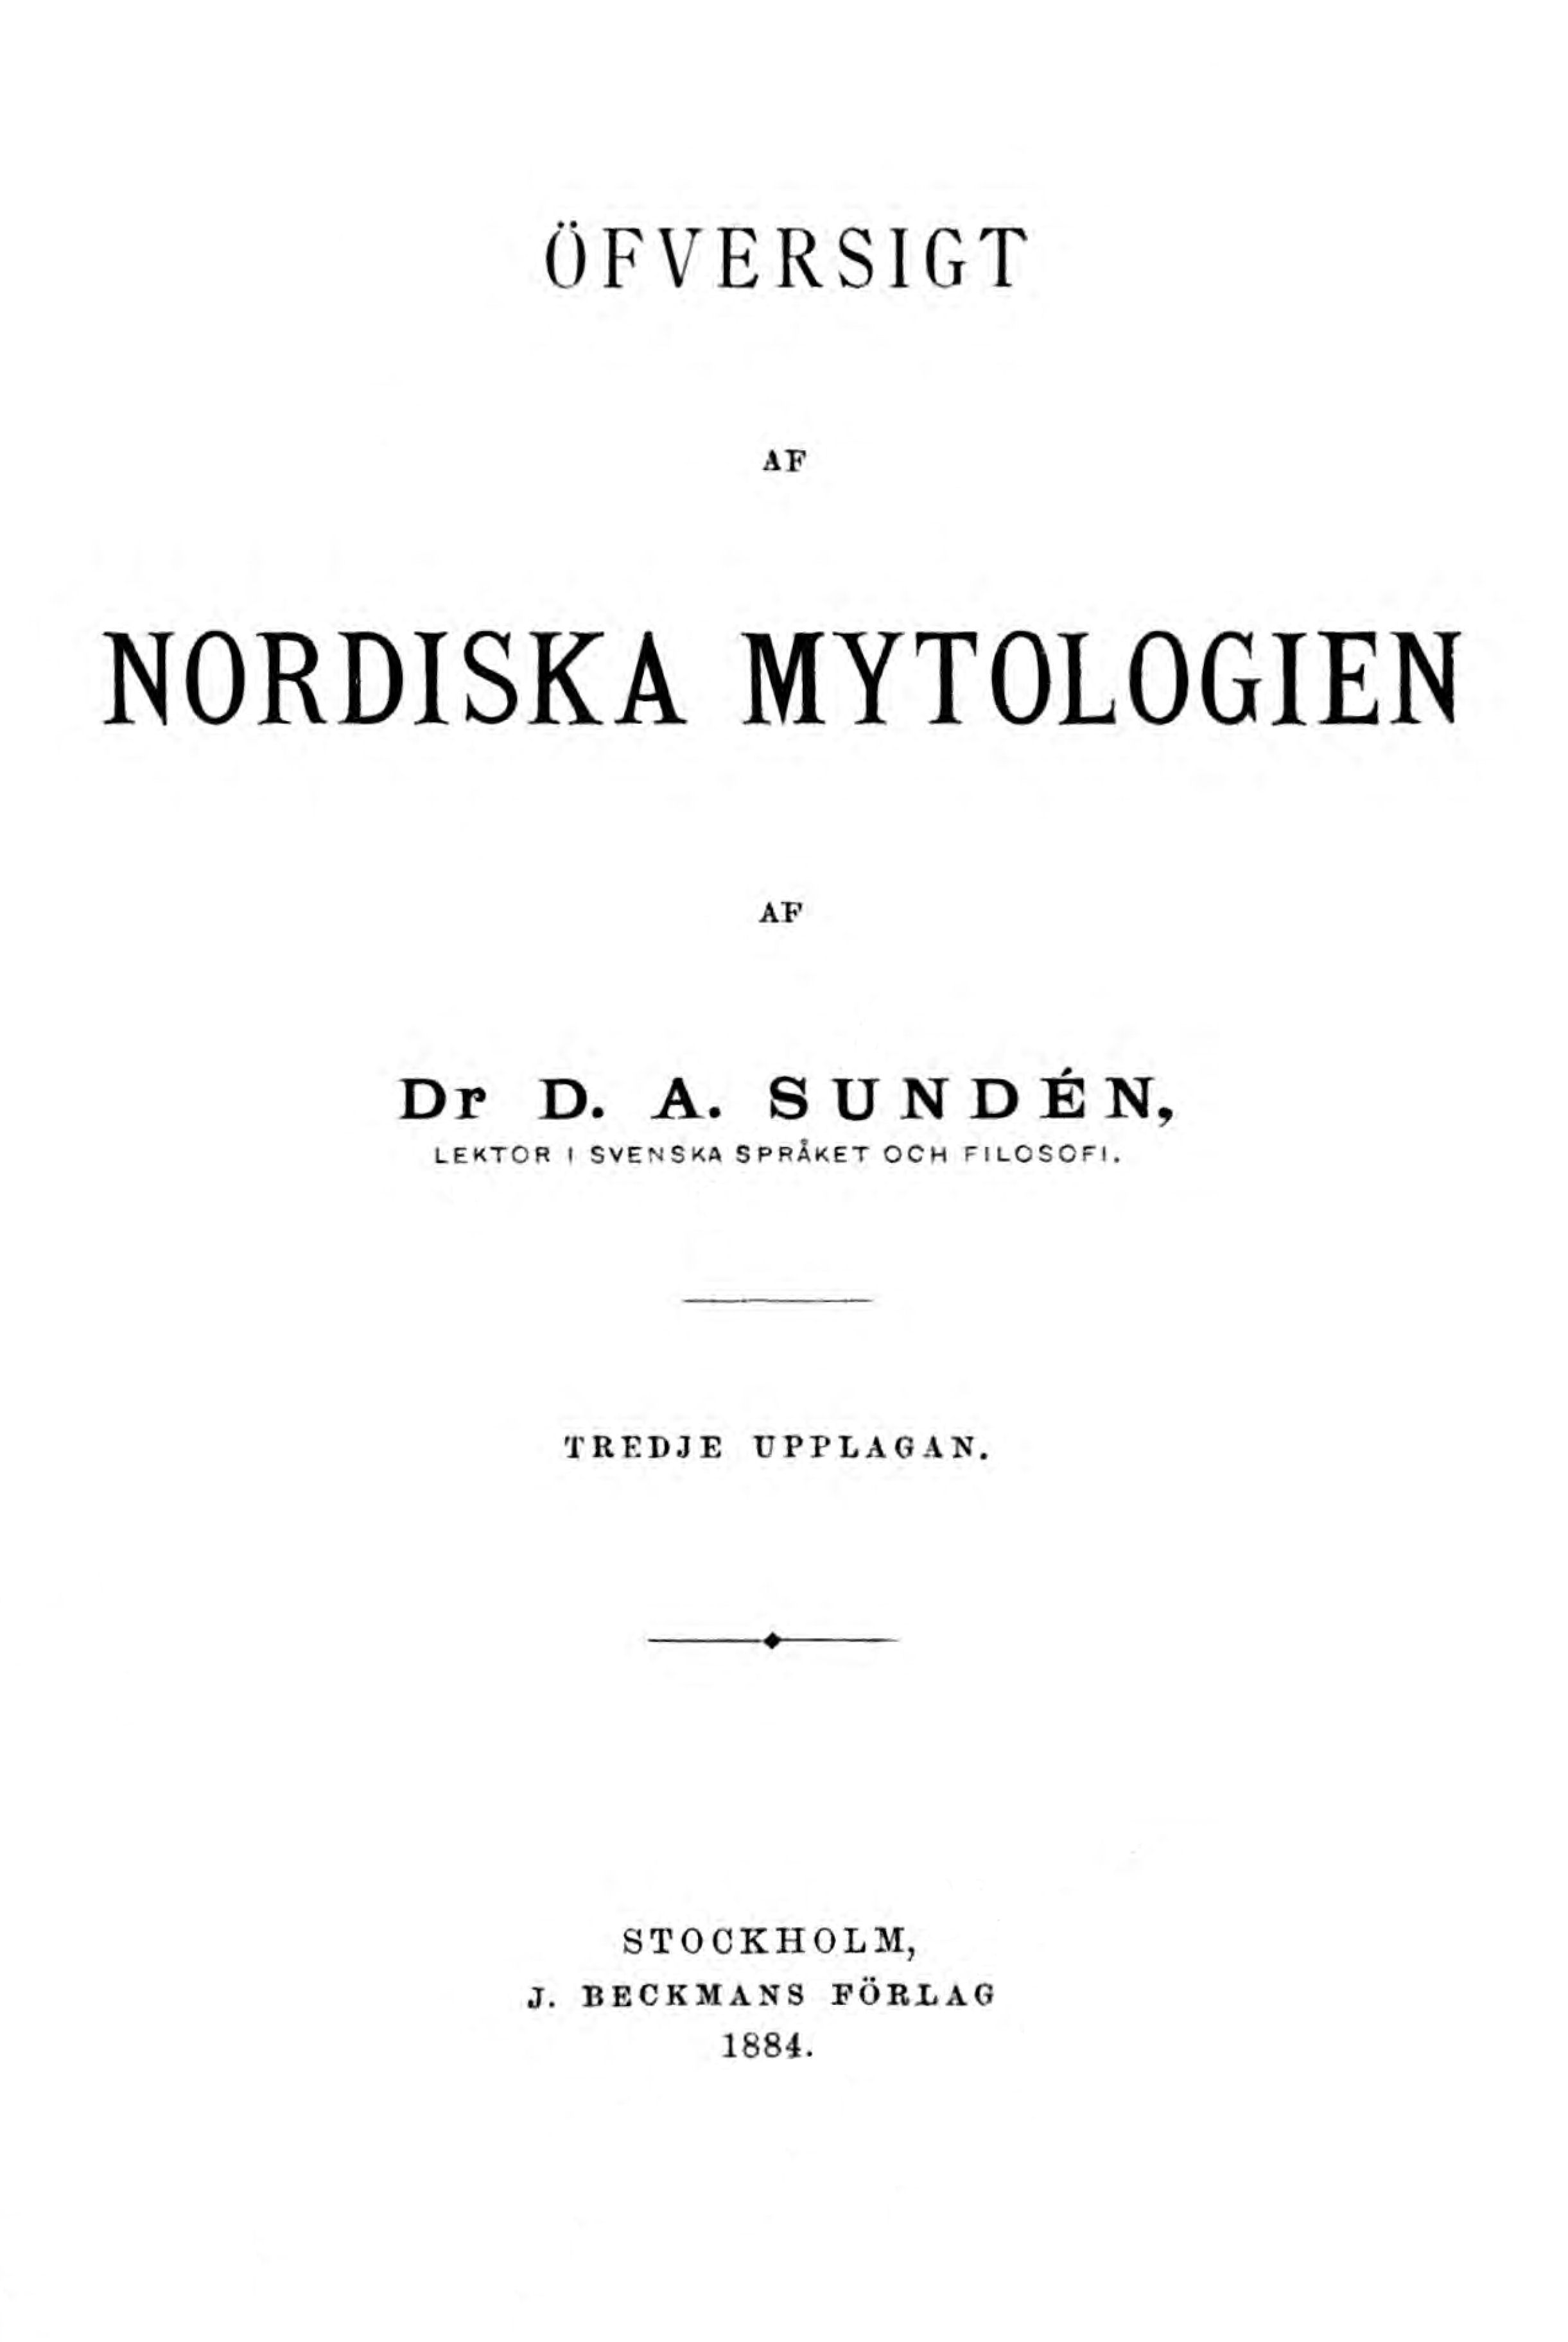 Nordik Mitoloji Genel Bakışı